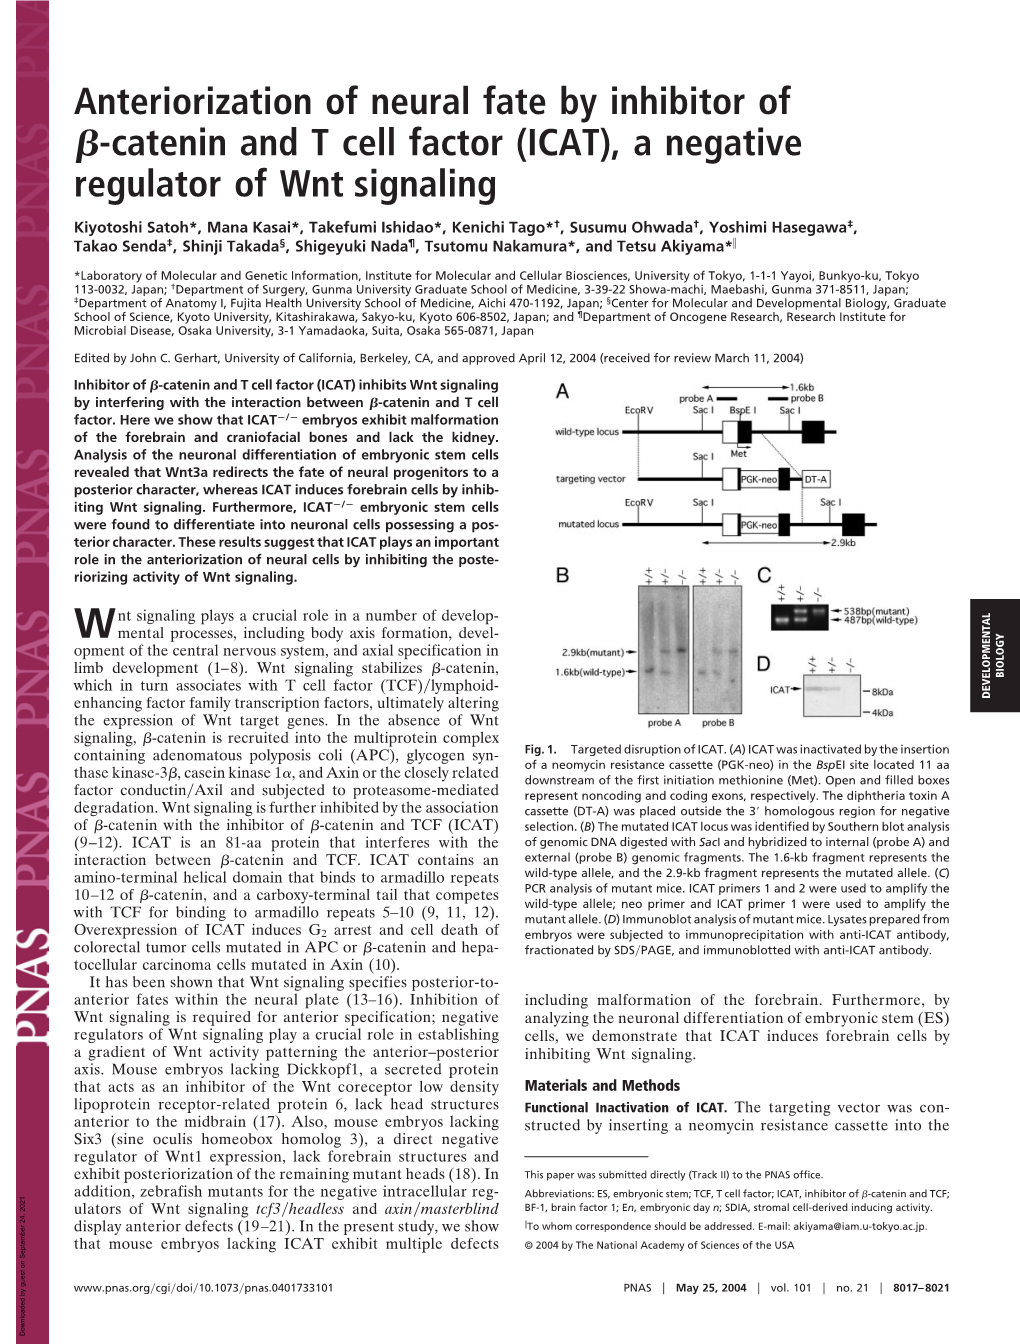 ICAT), a Negative Regulator of Wnt Signaling